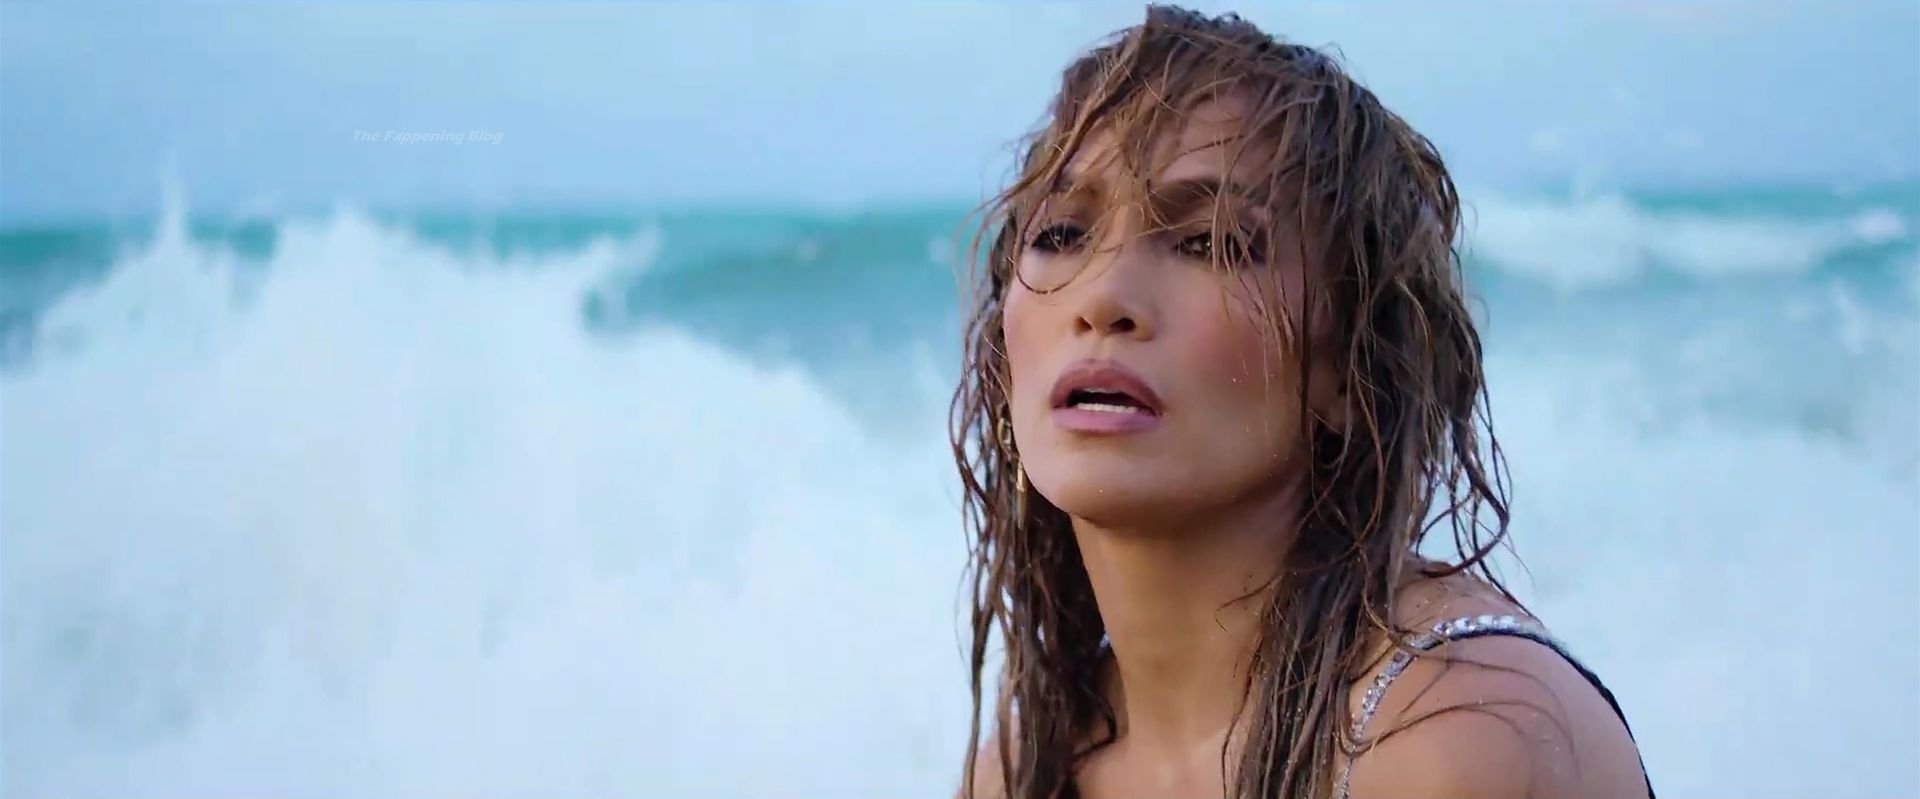 Jennifer-Lopez-Sexy-The-Fappening-Blog-14-1.jpg